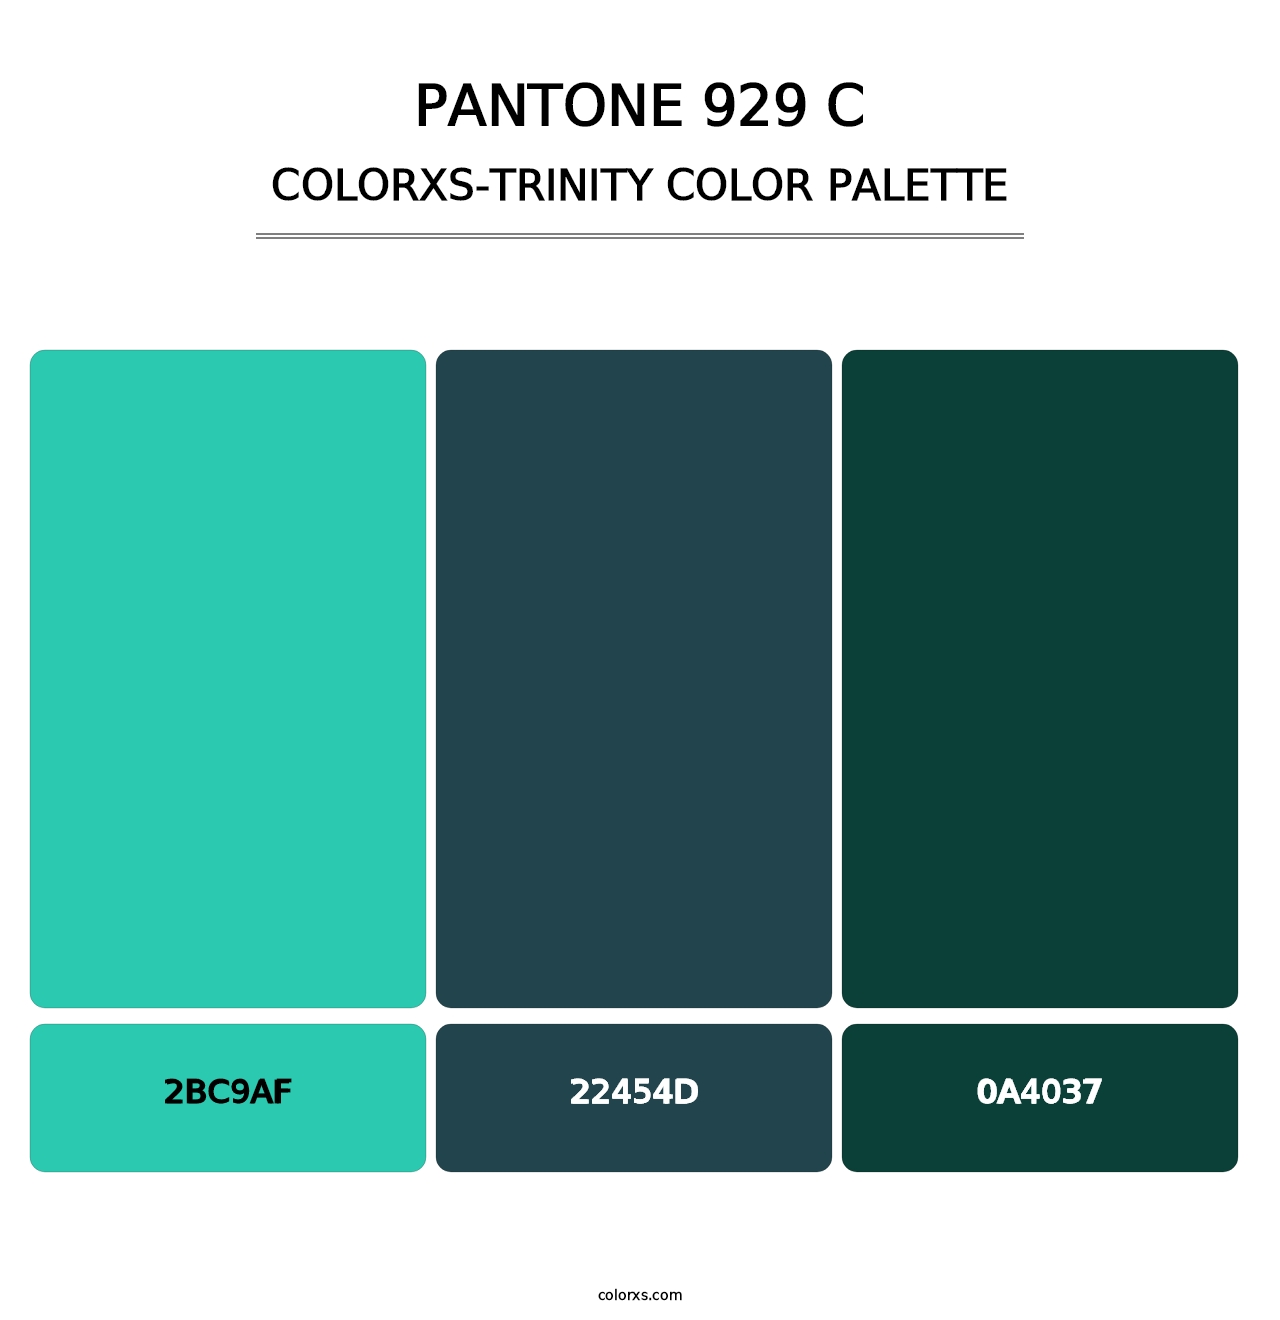 PANTONE 929 C - Colorxs Trinity Palette